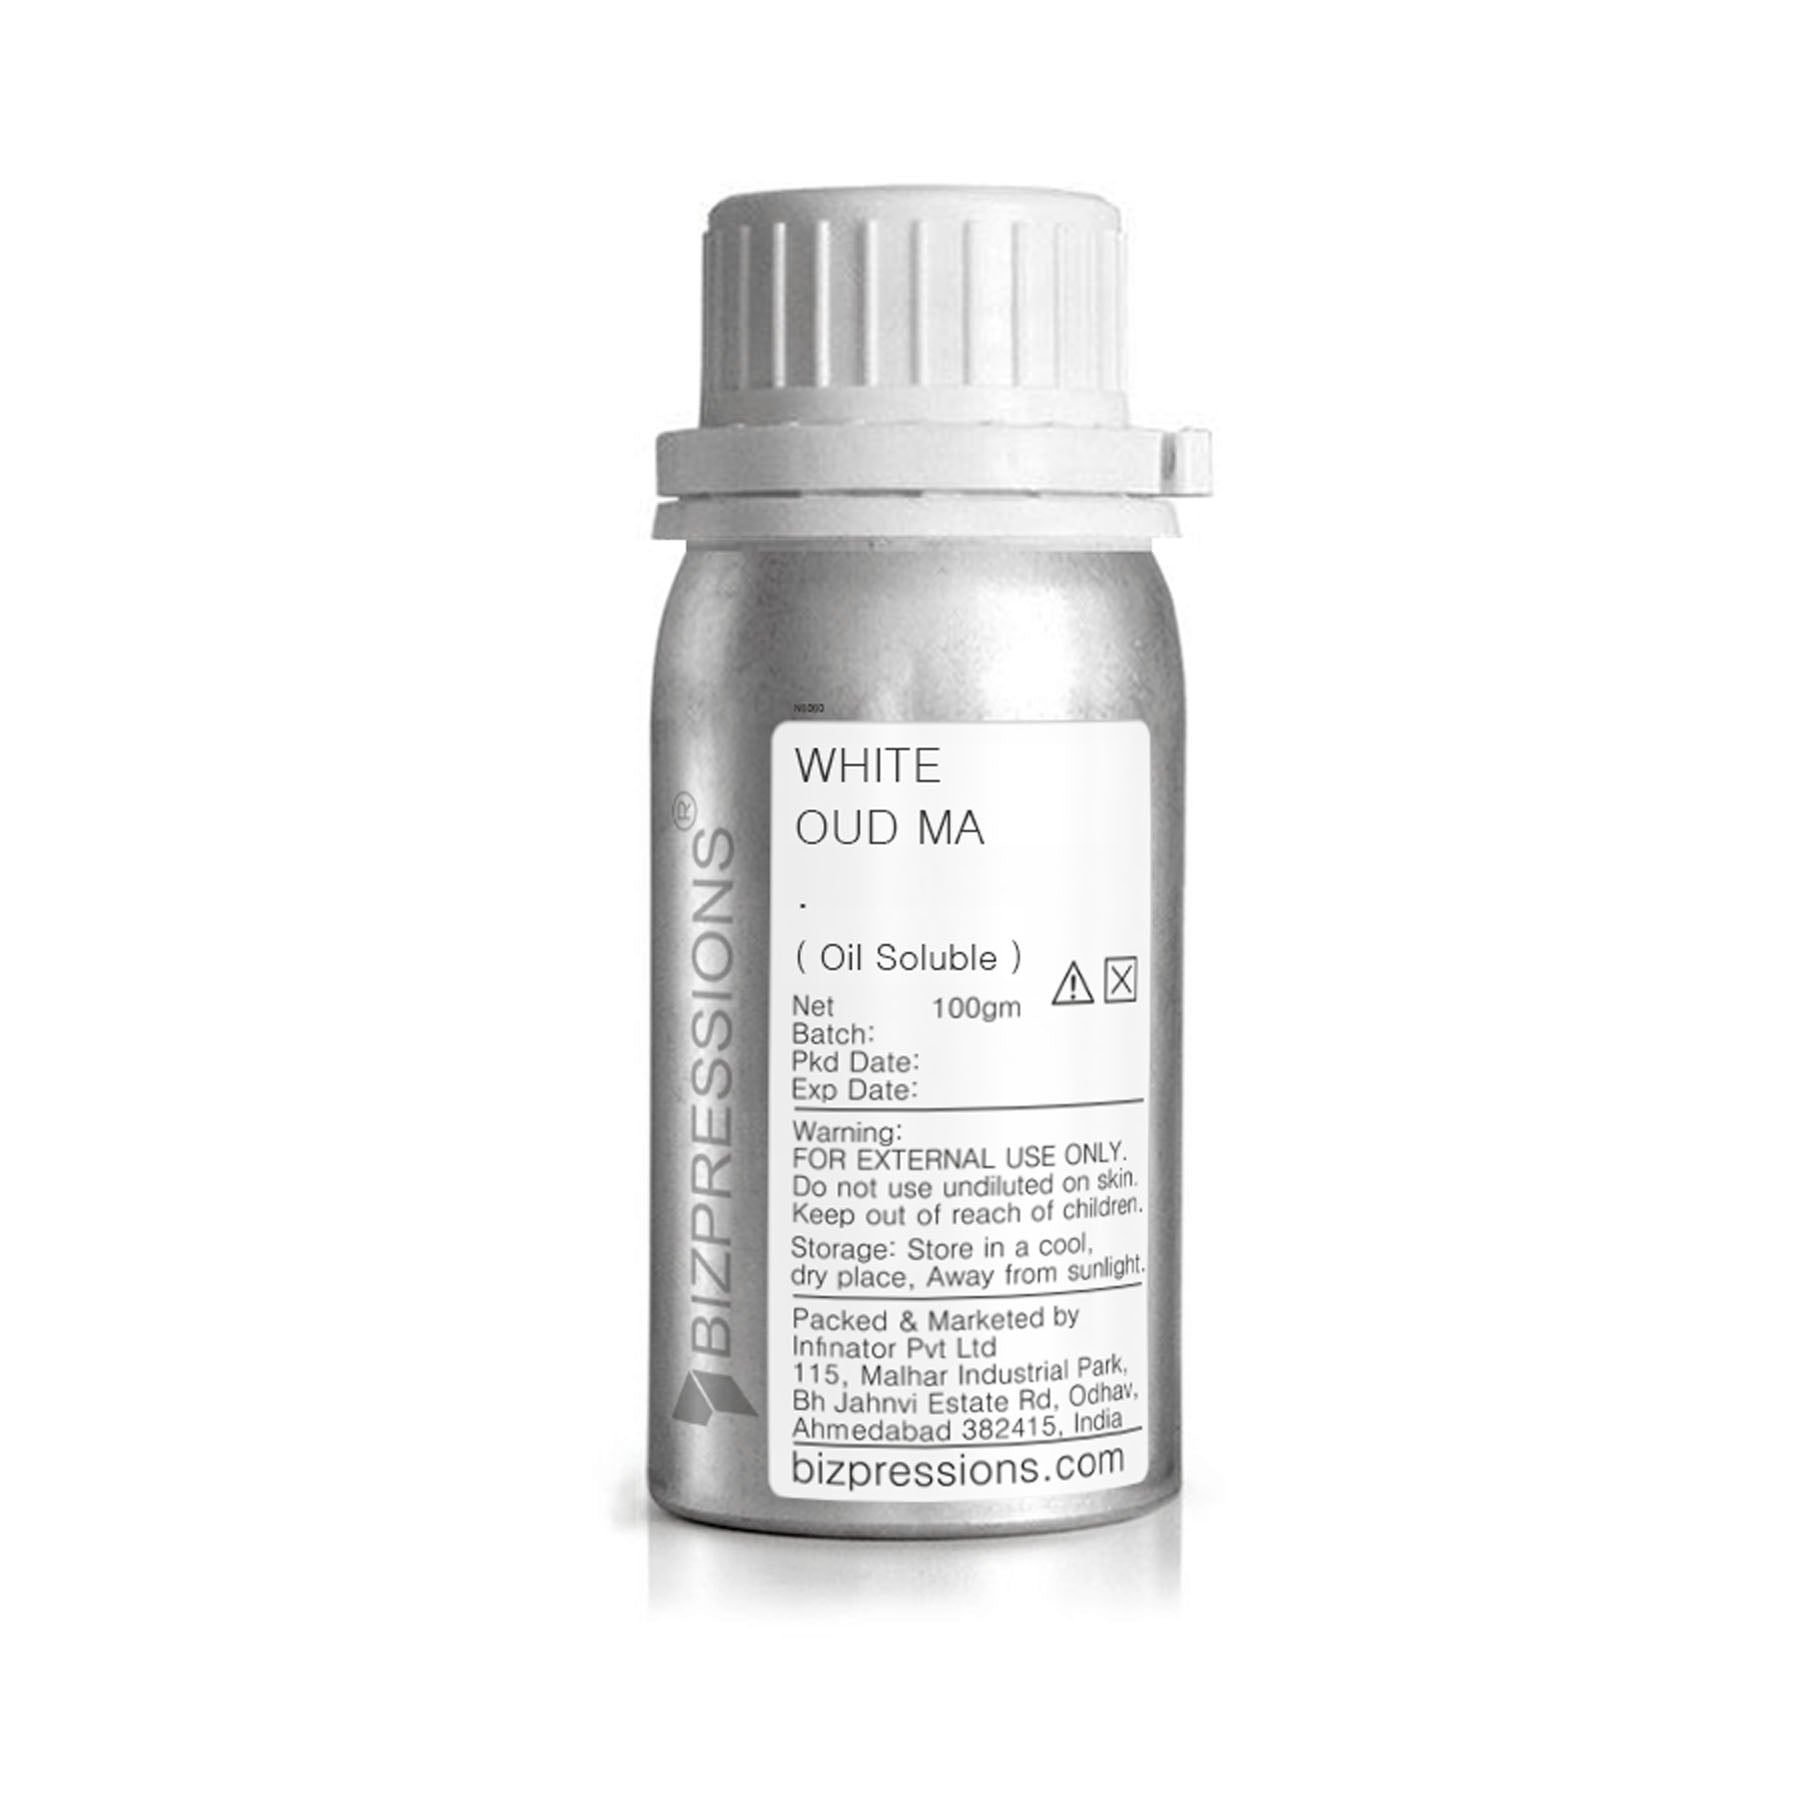 WHITE OUD MA - Fragrance ( Oil Soluble ) - 100 gm